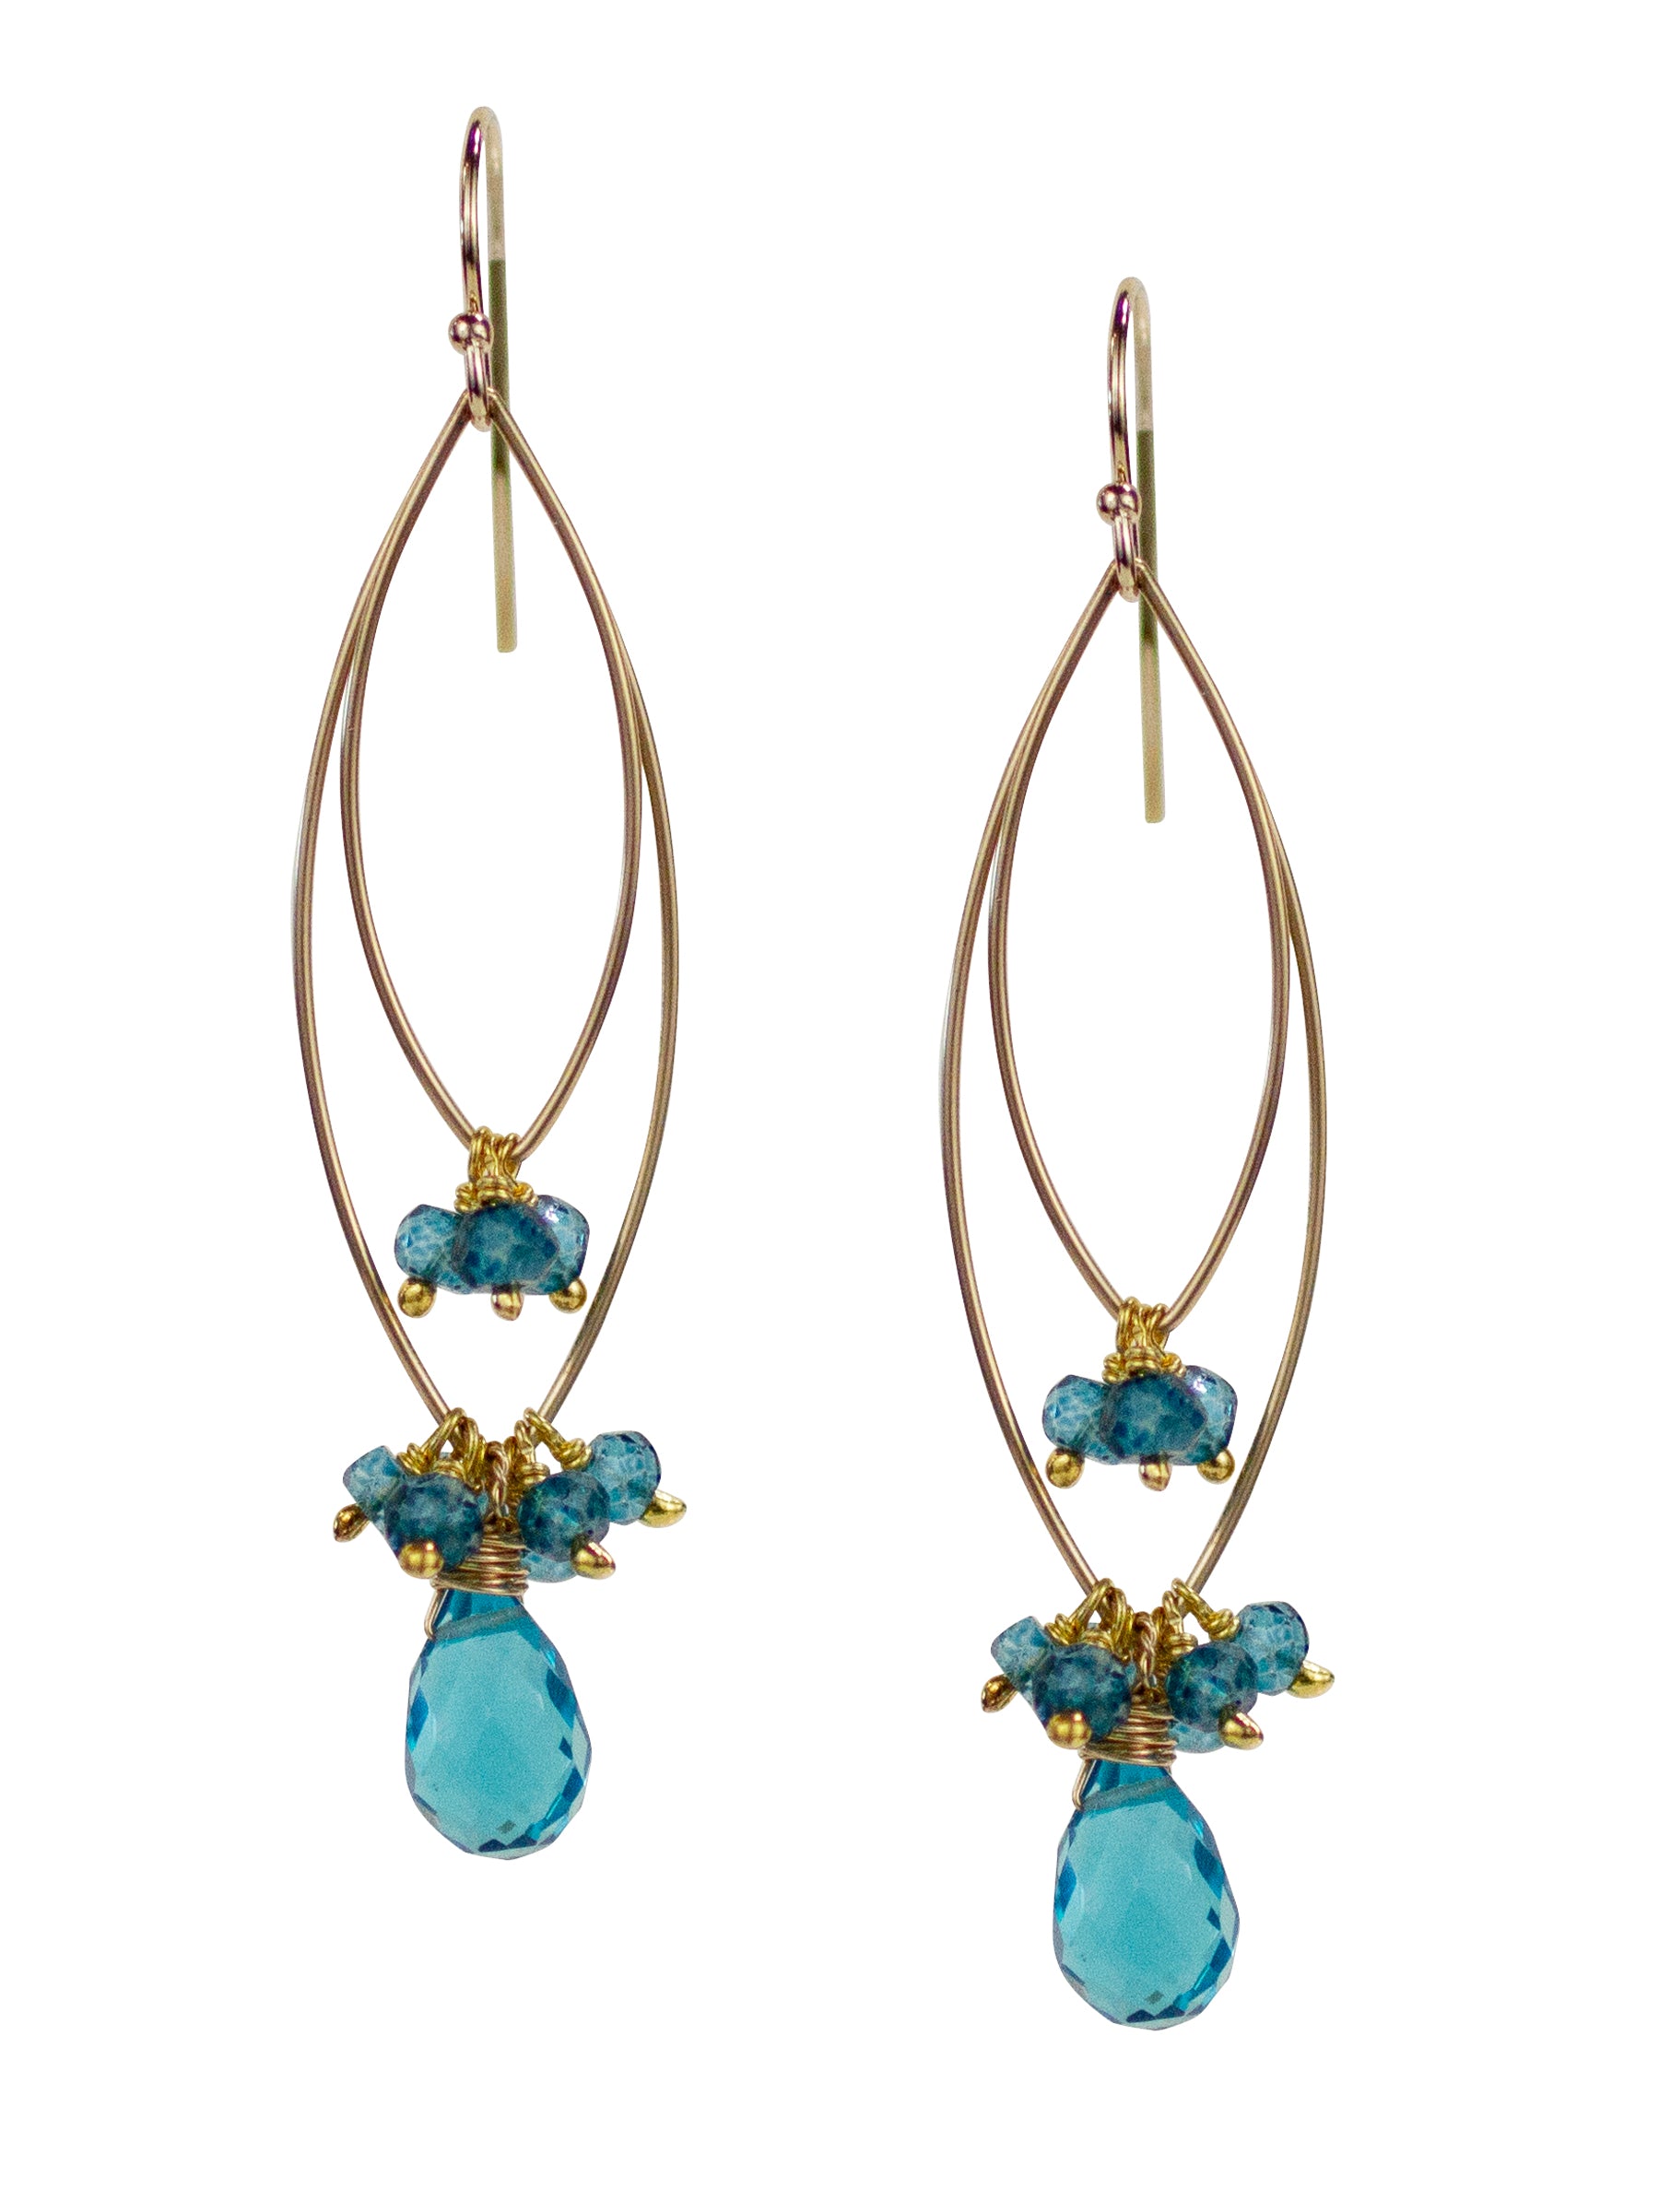 Balboa Earrings - Lulu Designs Jewelry